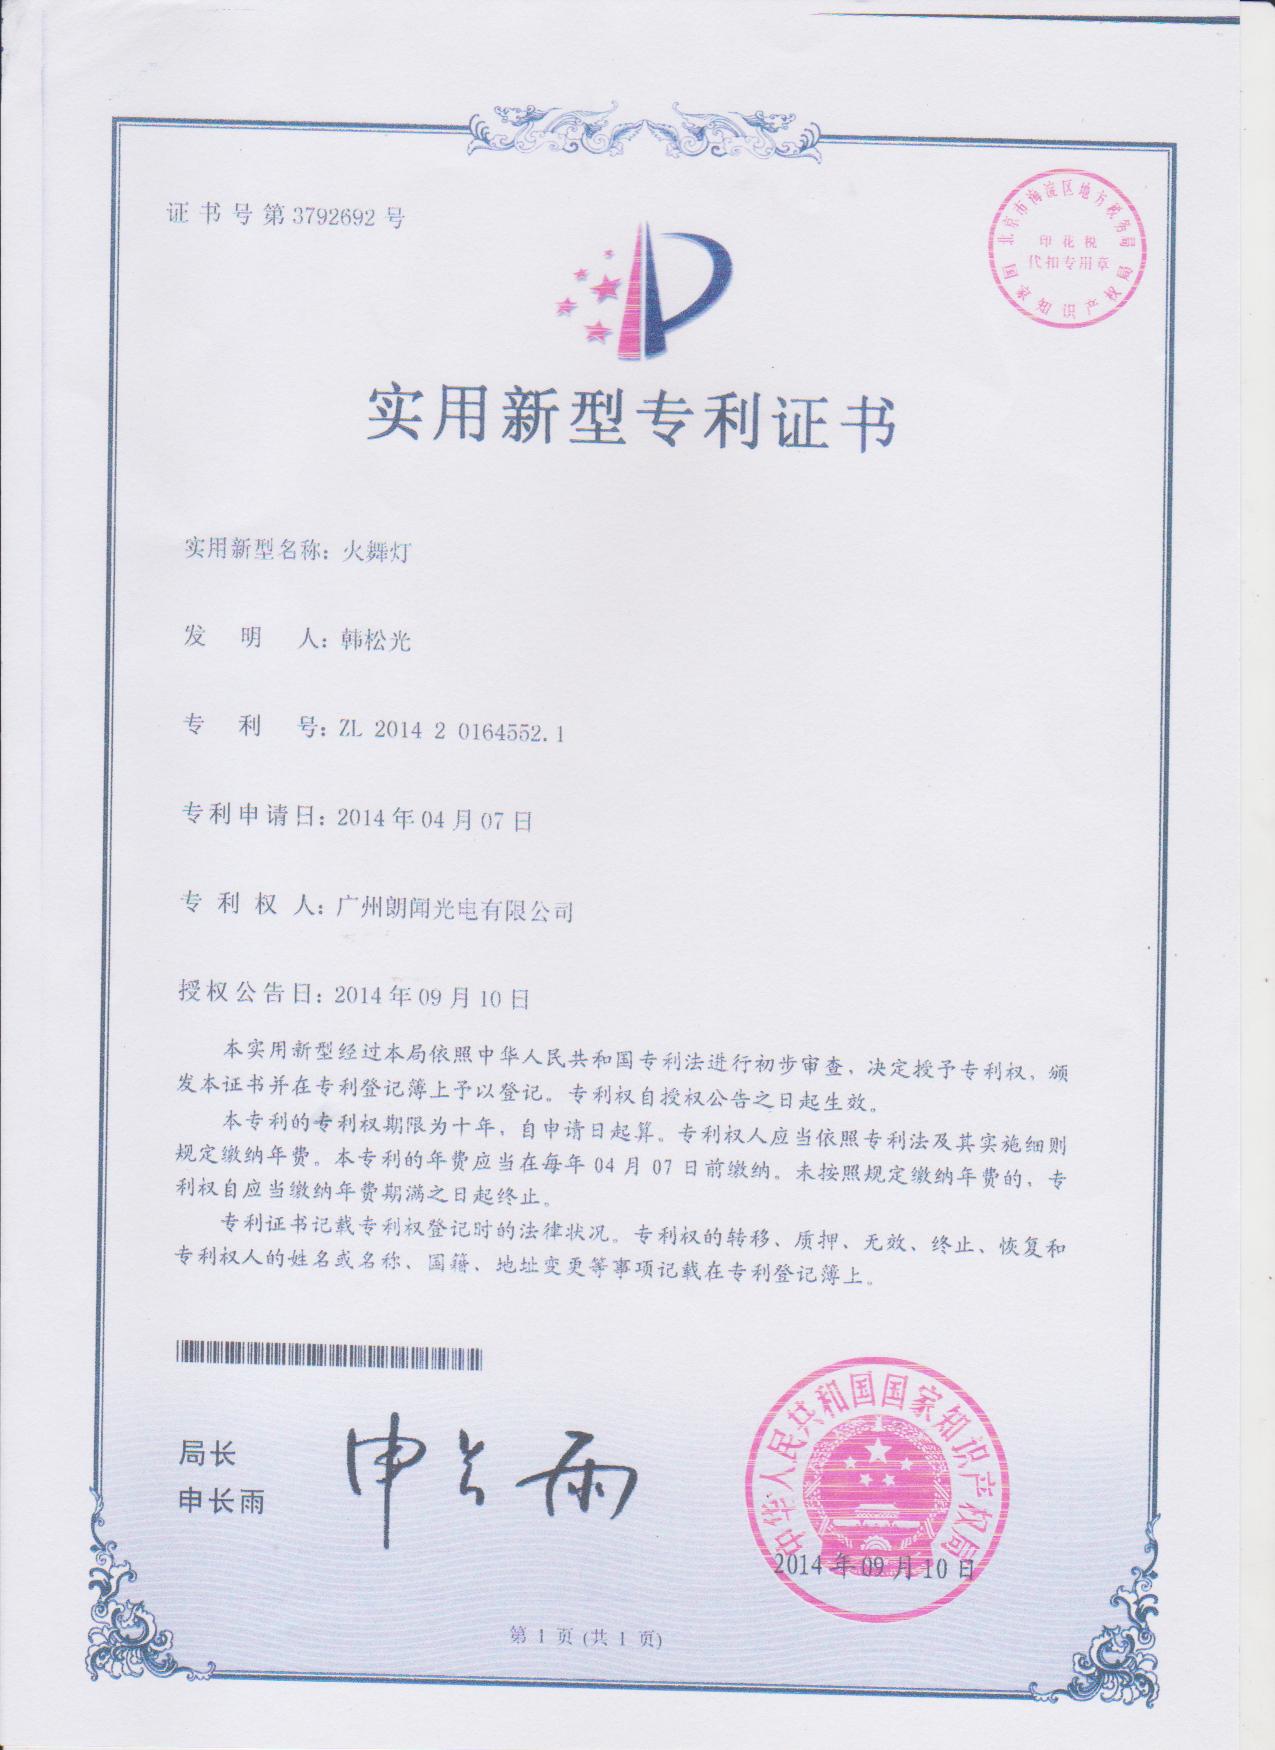 Patent certificate for firedance light